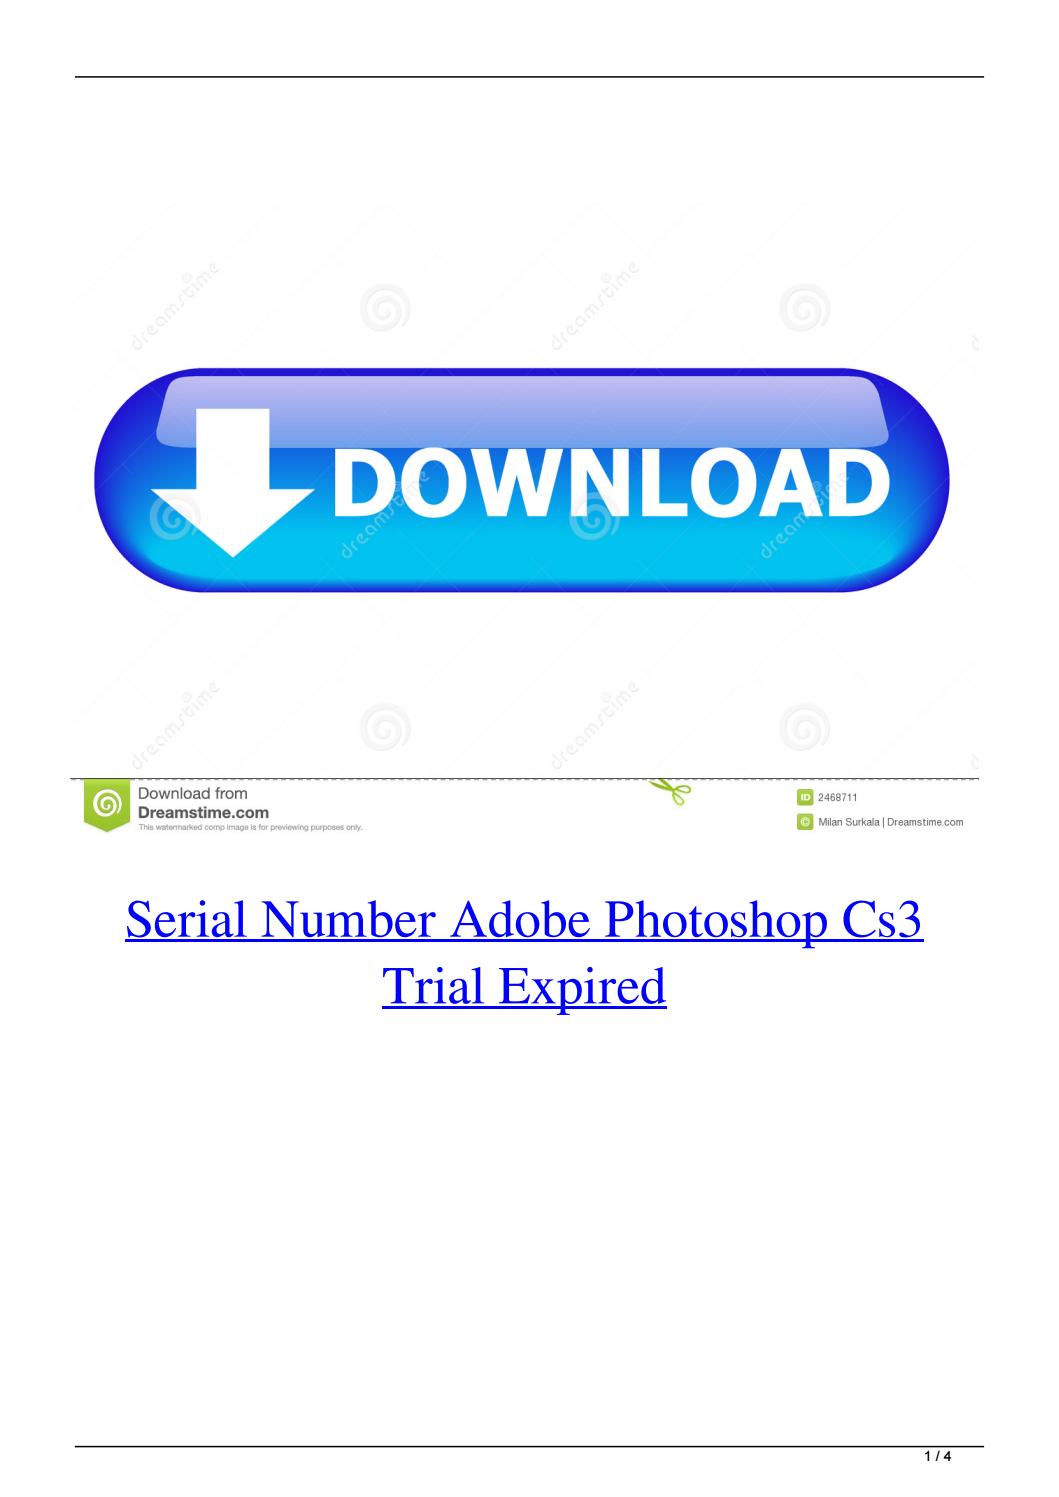 adobe photoshop cs3 serial number crack free download